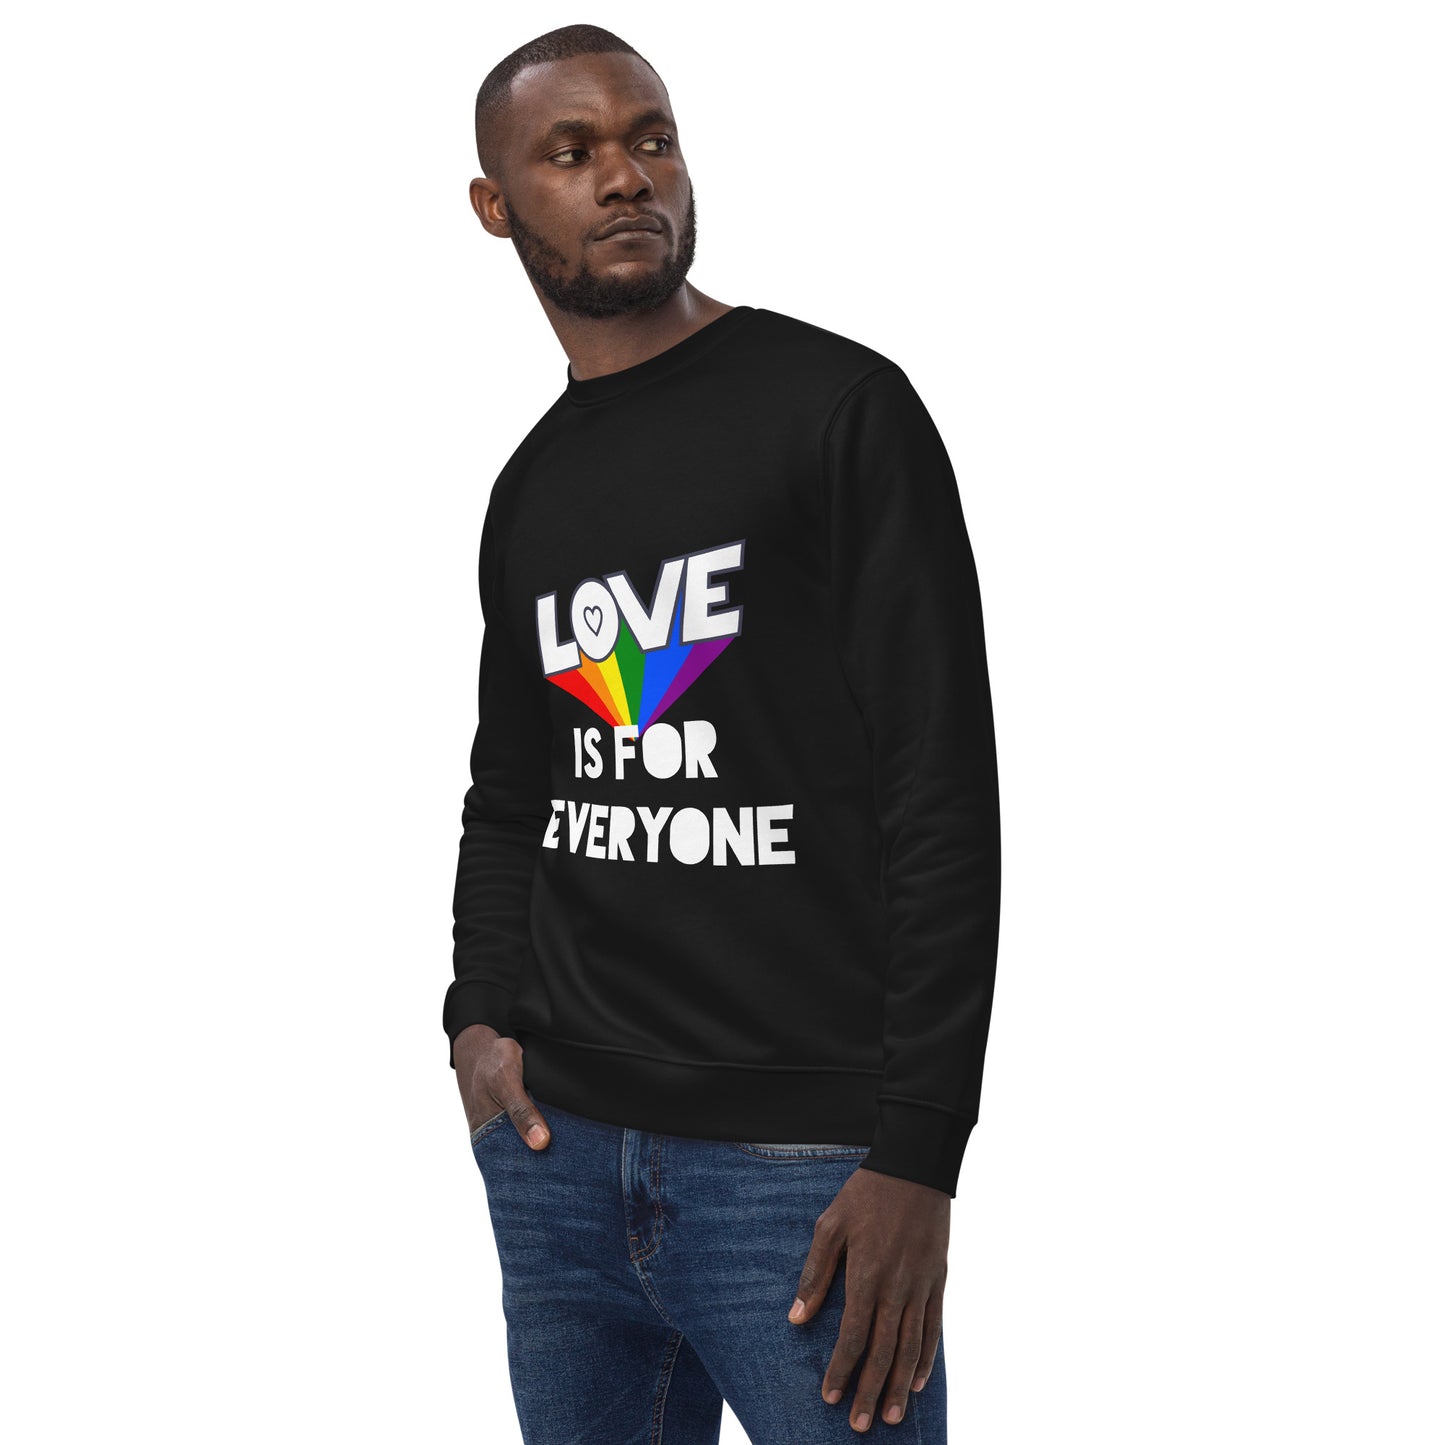 Love is for everyone, sweatshirt